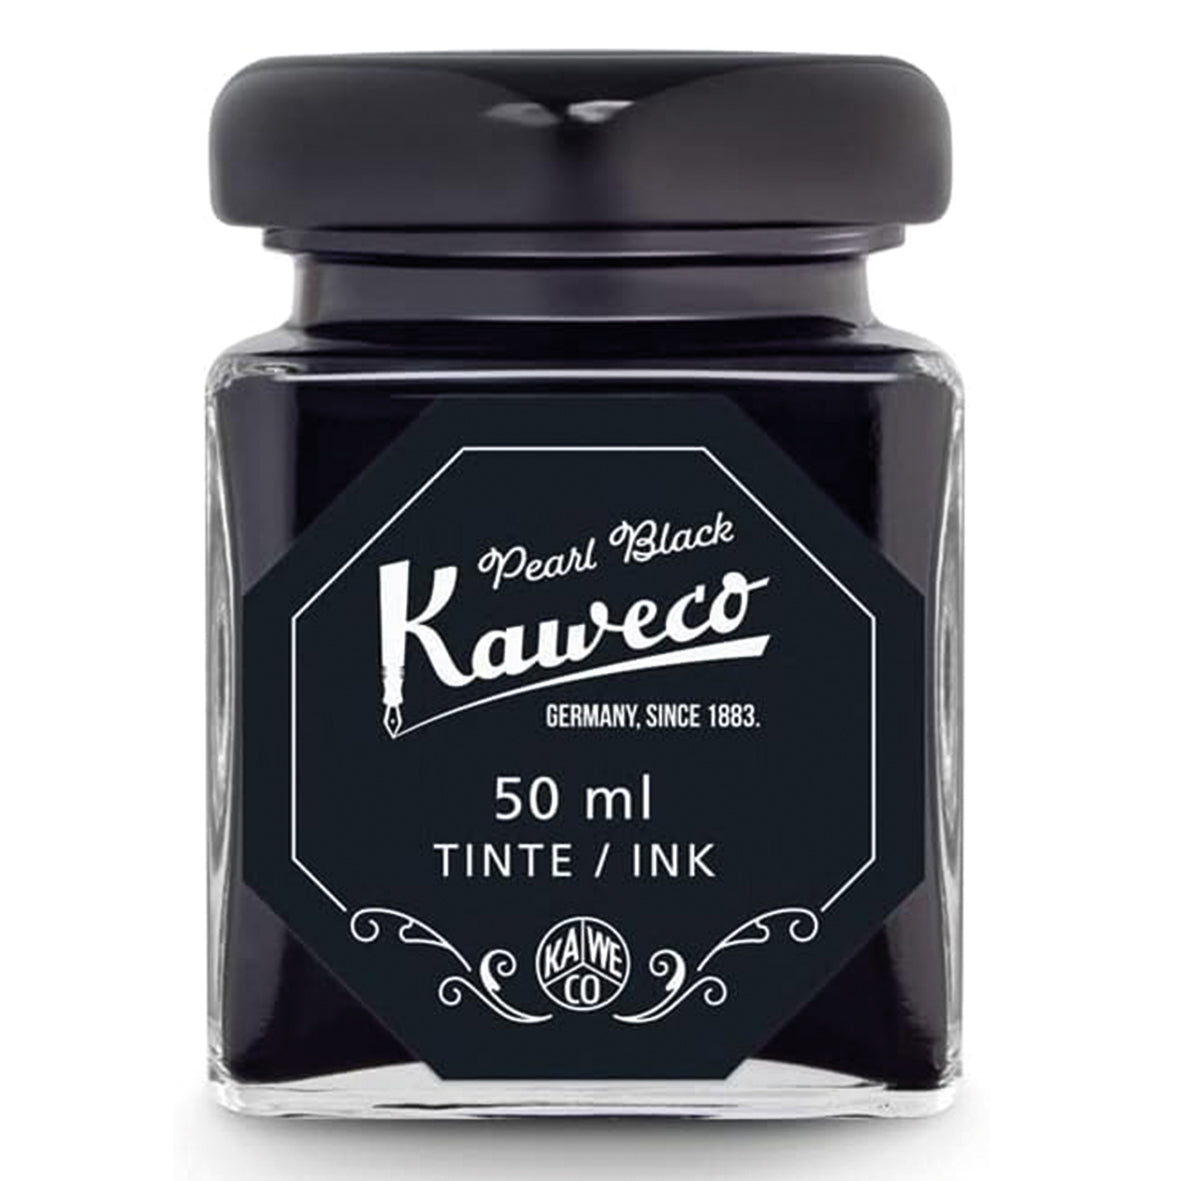 Tintenglas Kaweco Pearl Black, 50 ml